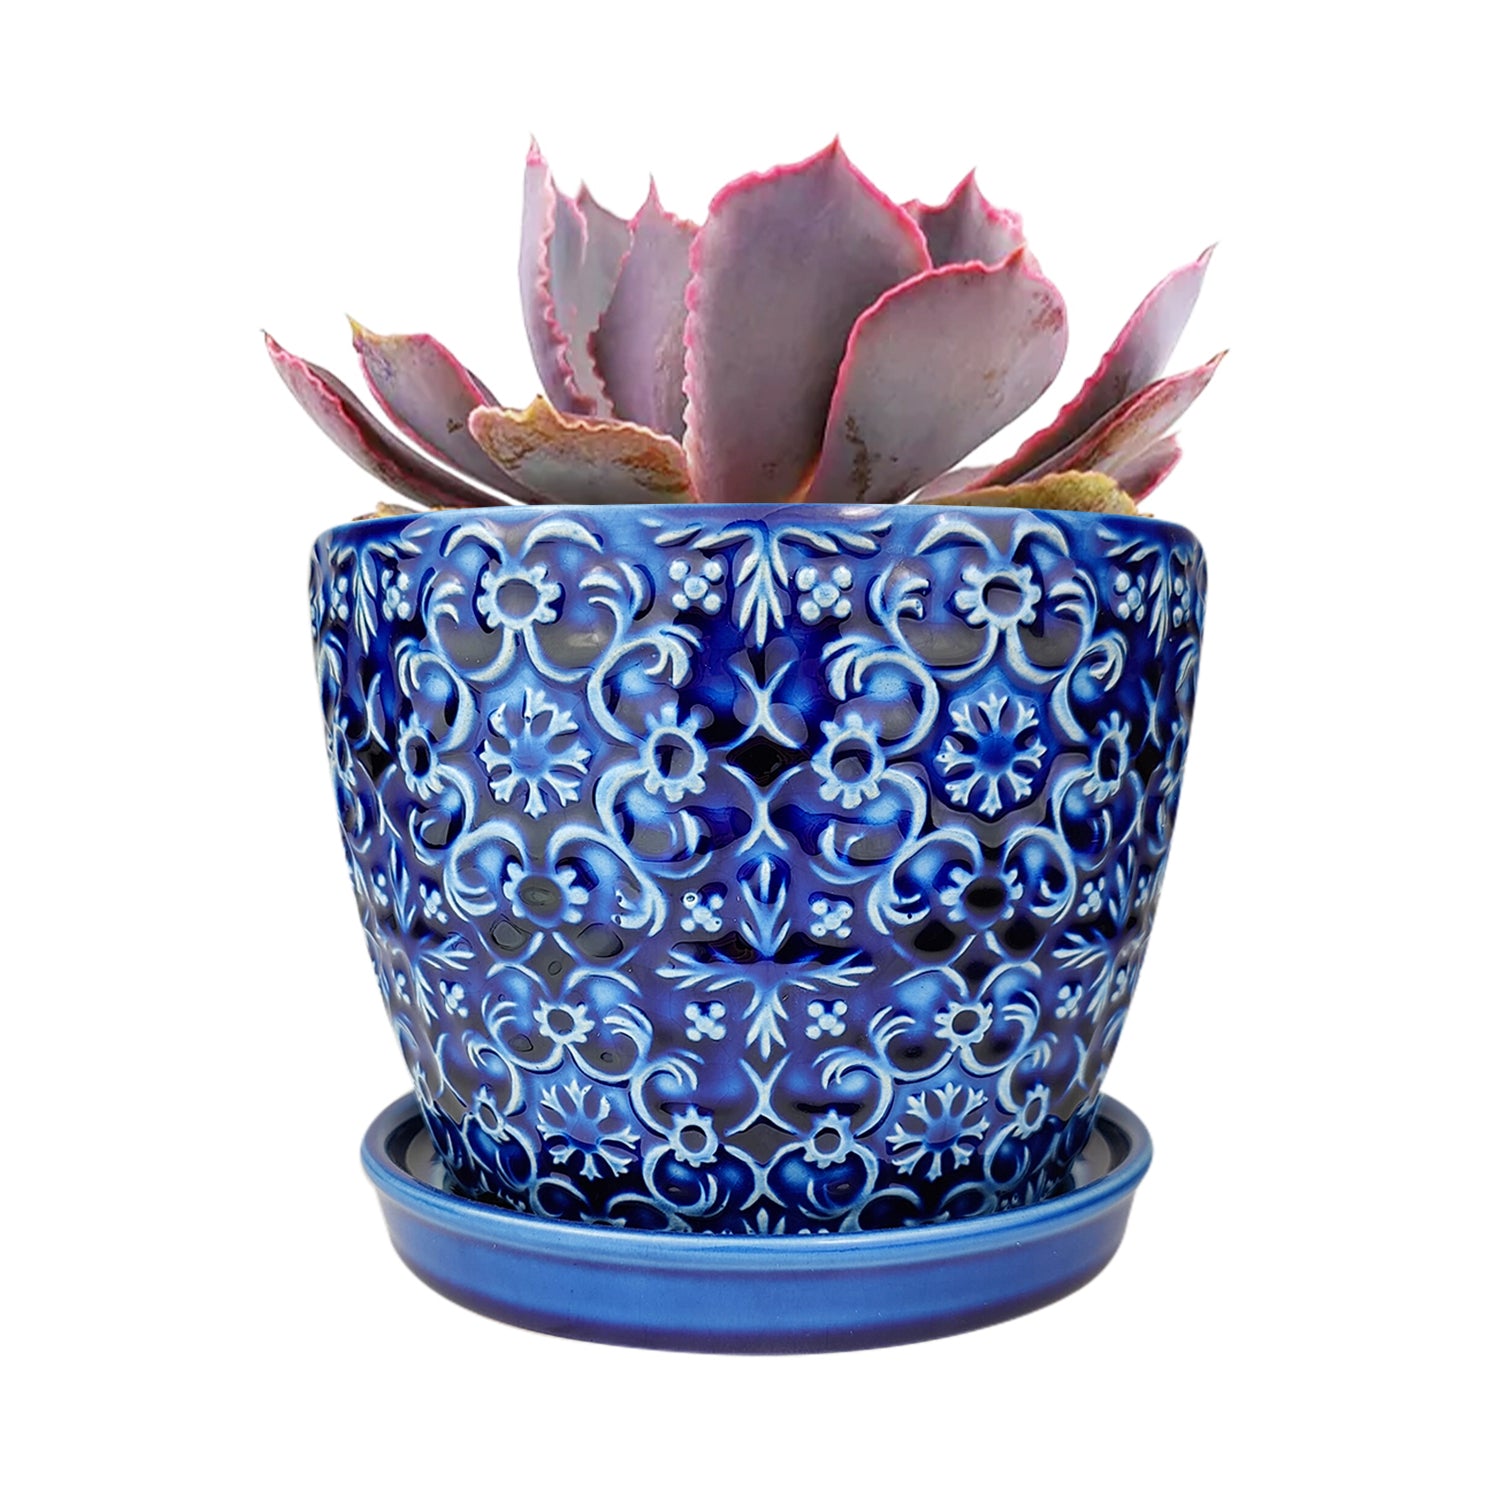 6 inch blue ceramic pot, unique pots for succulents and cacti, pots with drainage hole and saucer, medium ceramic pots, pots for indoor plants